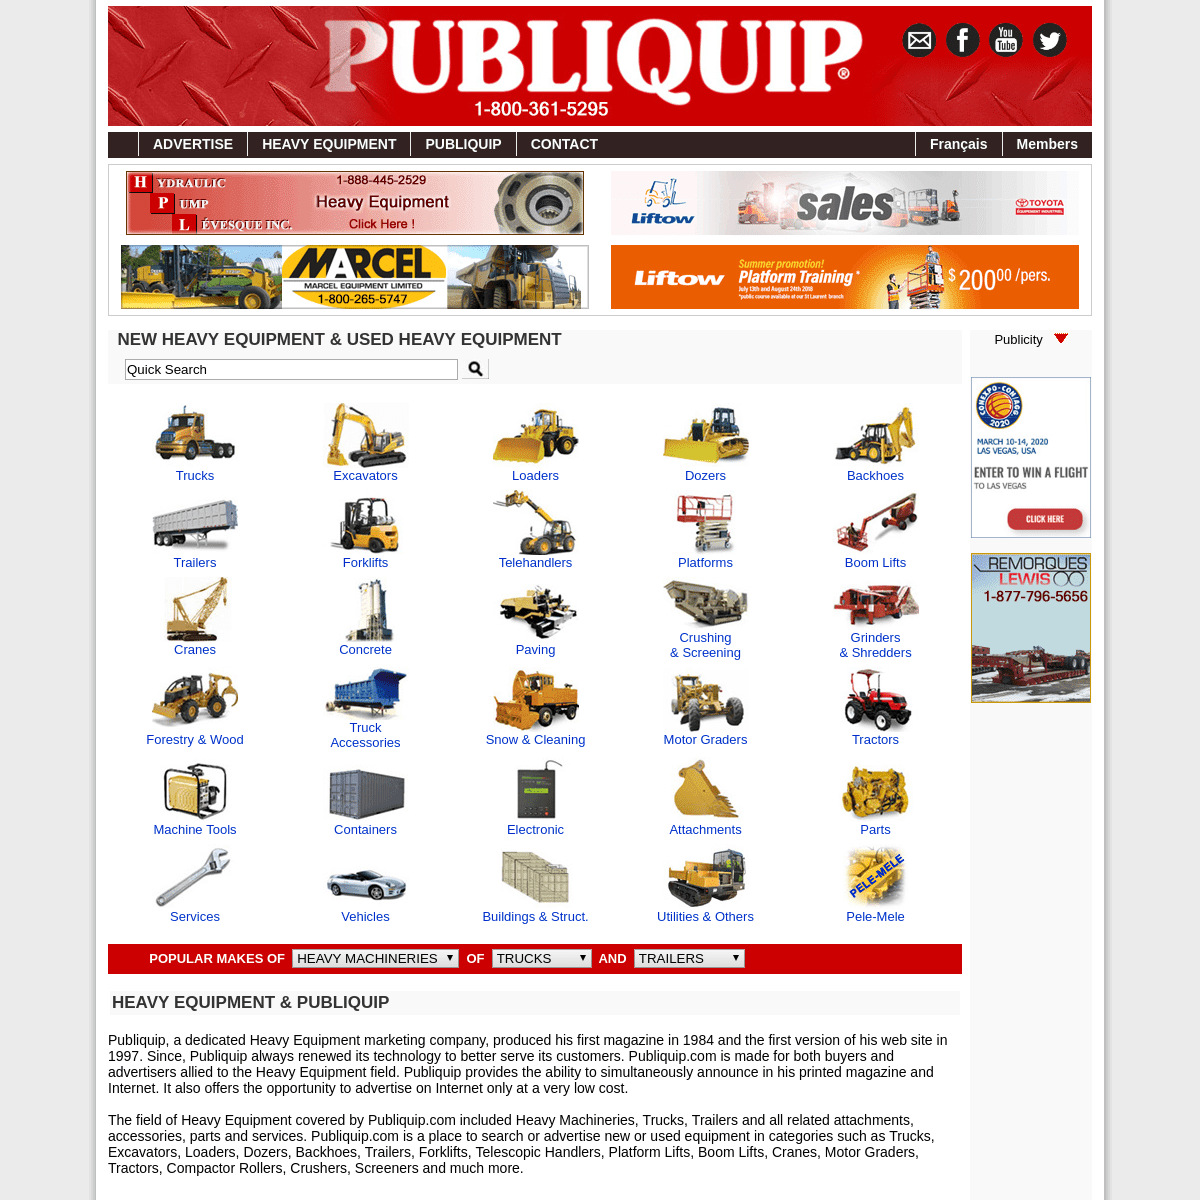 A complete backup of publiquip.com